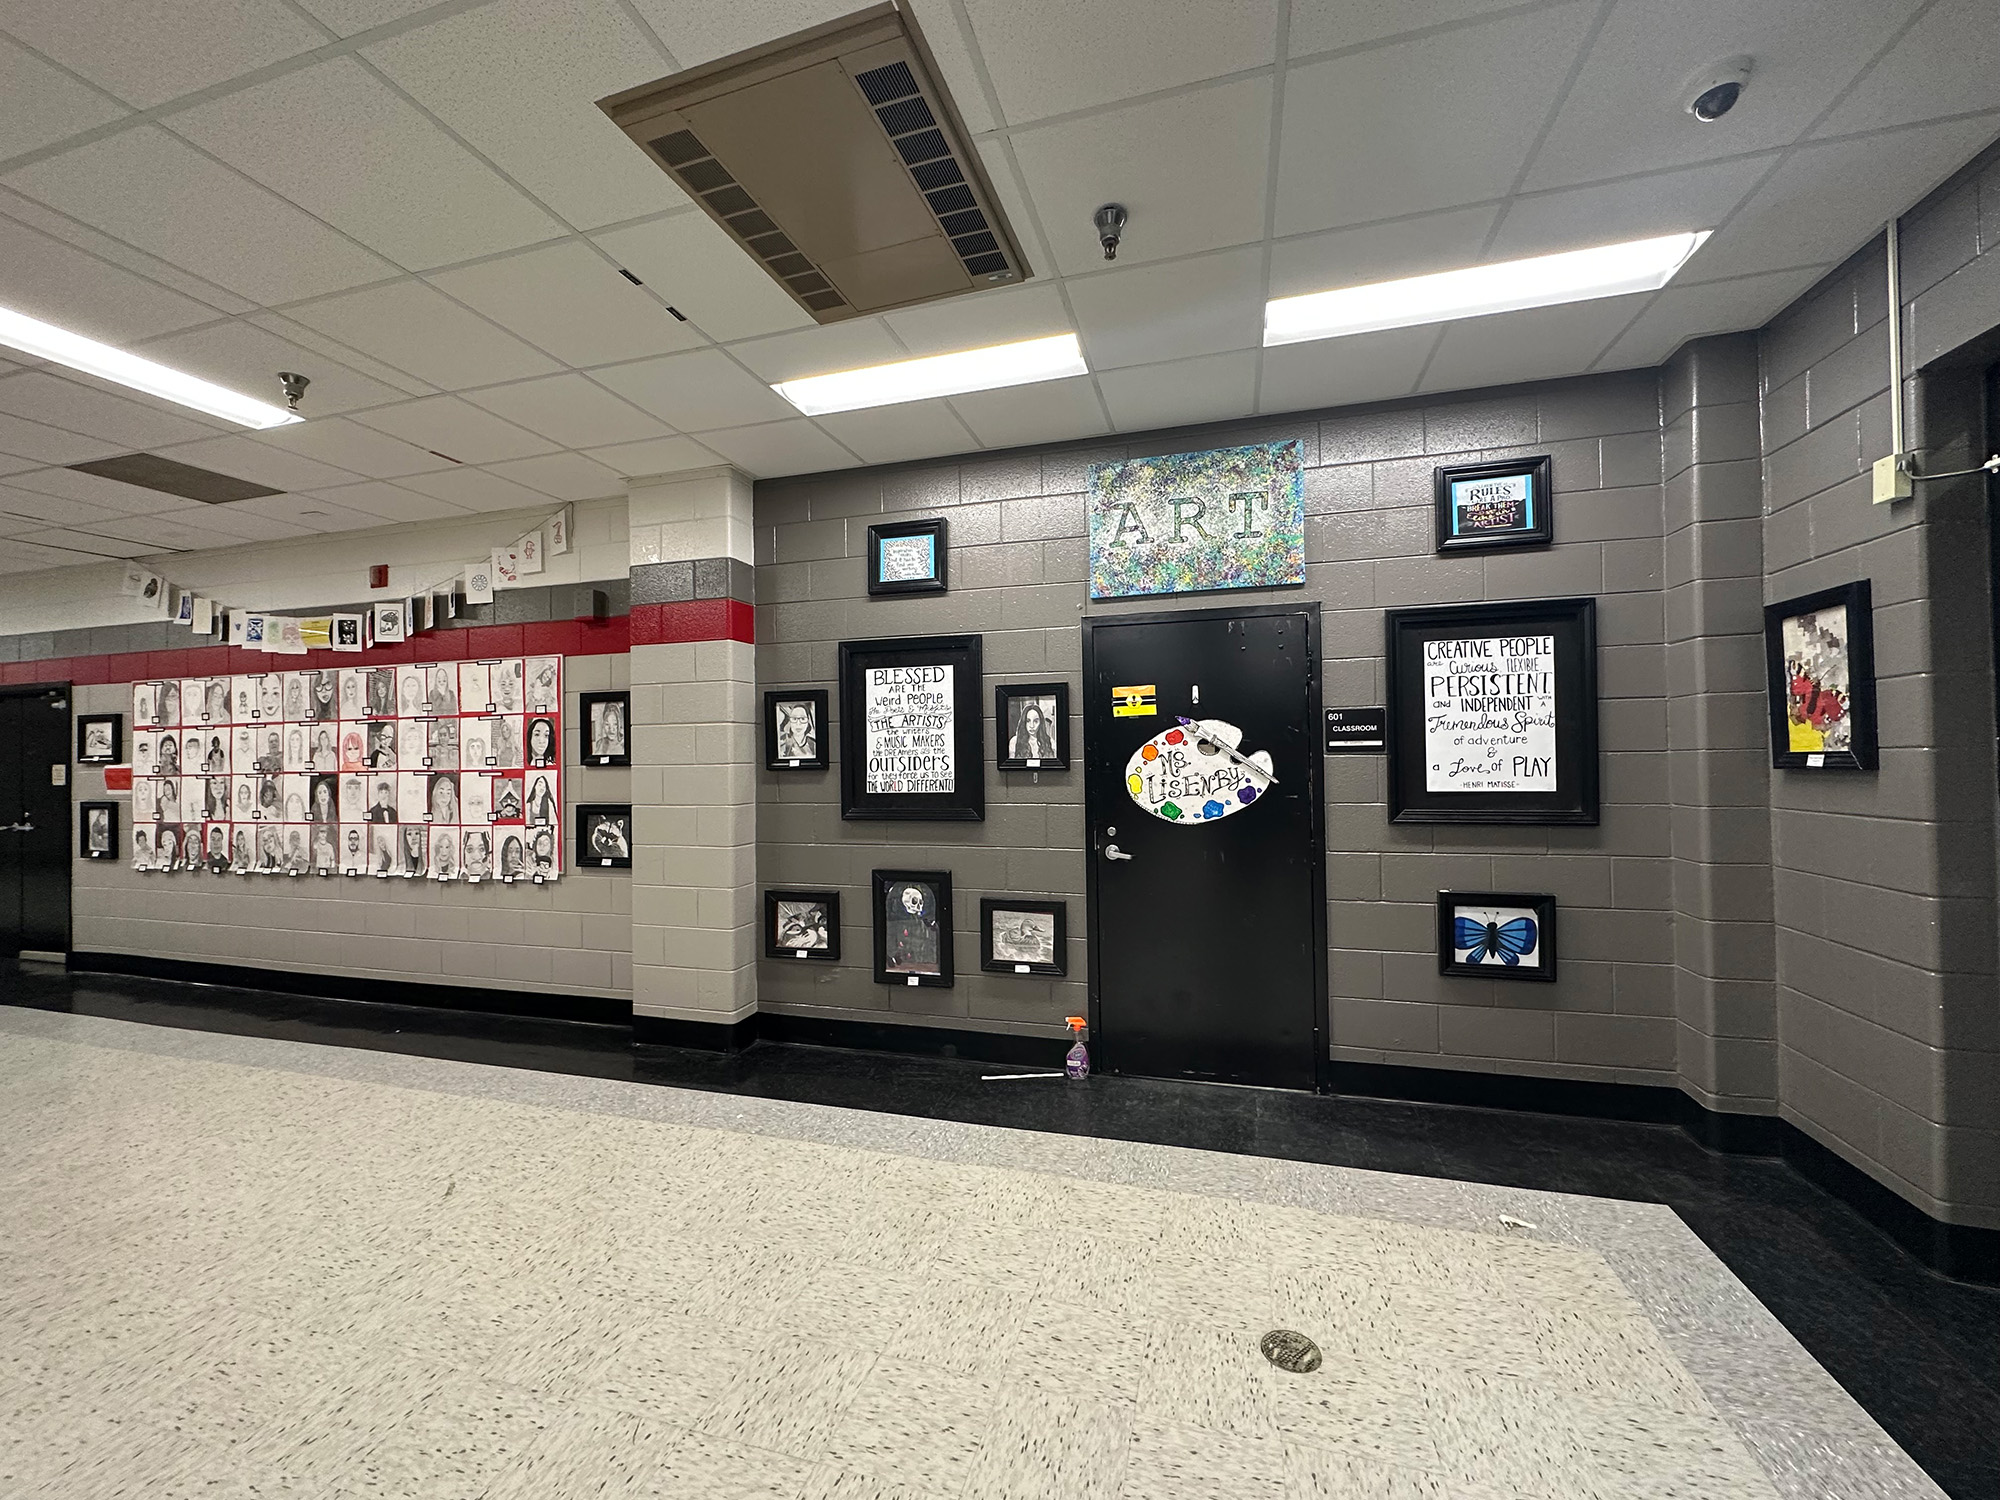 LCHS Art Show / Image of LCHS Art Show hallway displays